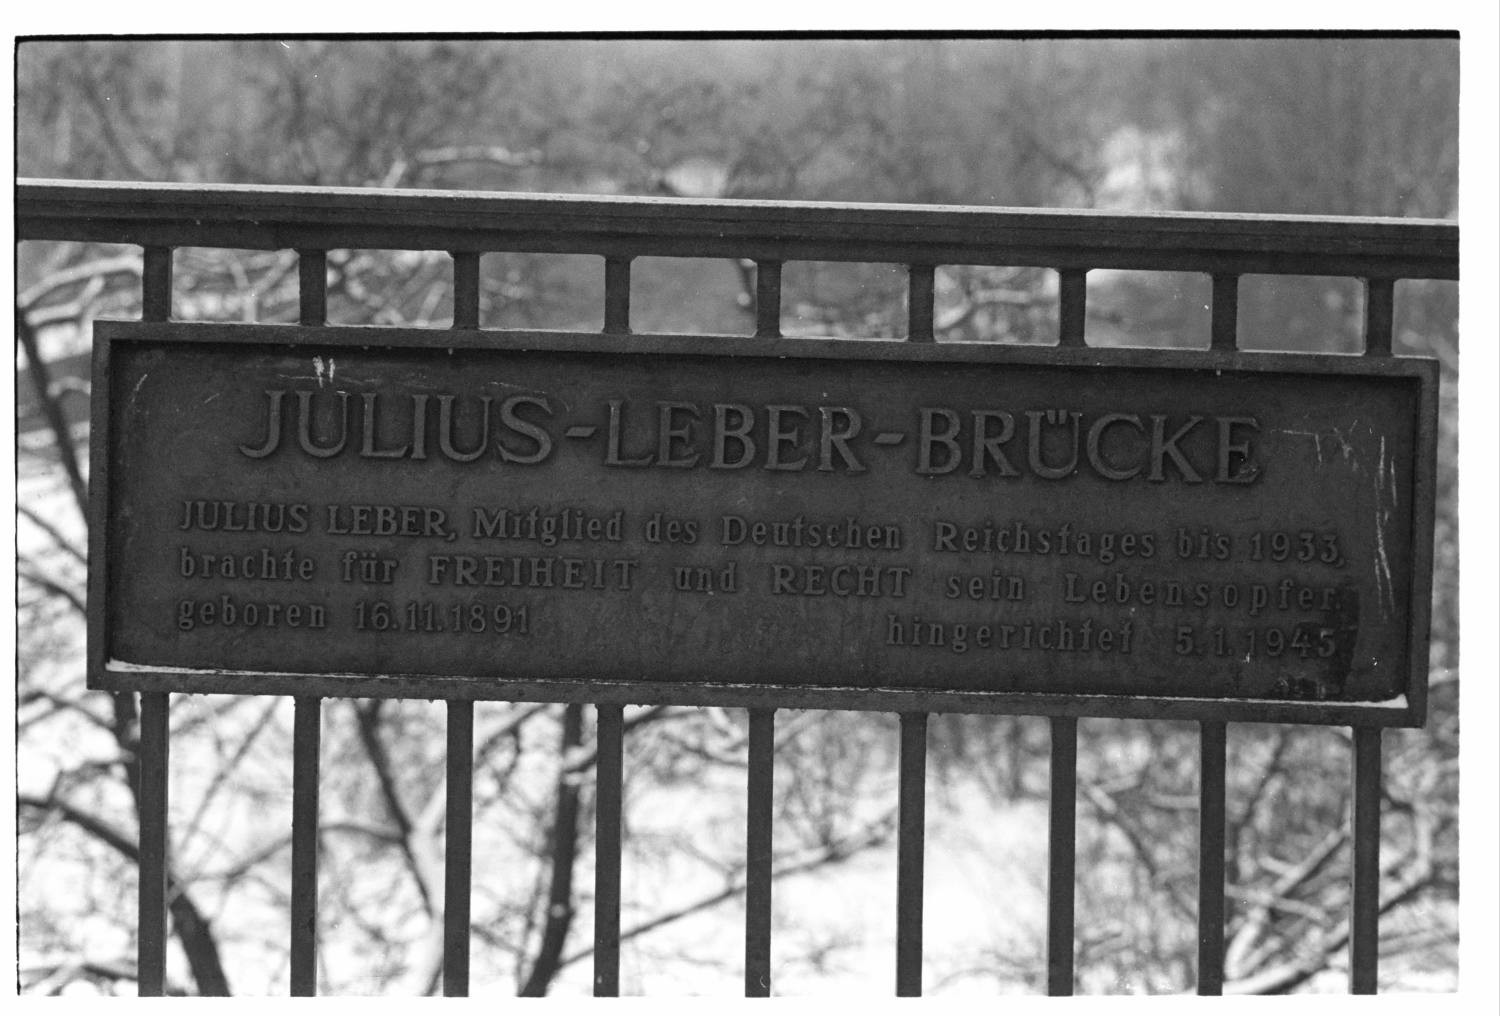 Kleinbildnegative: Julius-Leber-Brücke, 1983 (Museen Tempelhof-Schöneberg/Jürgen Henschel RR-F)